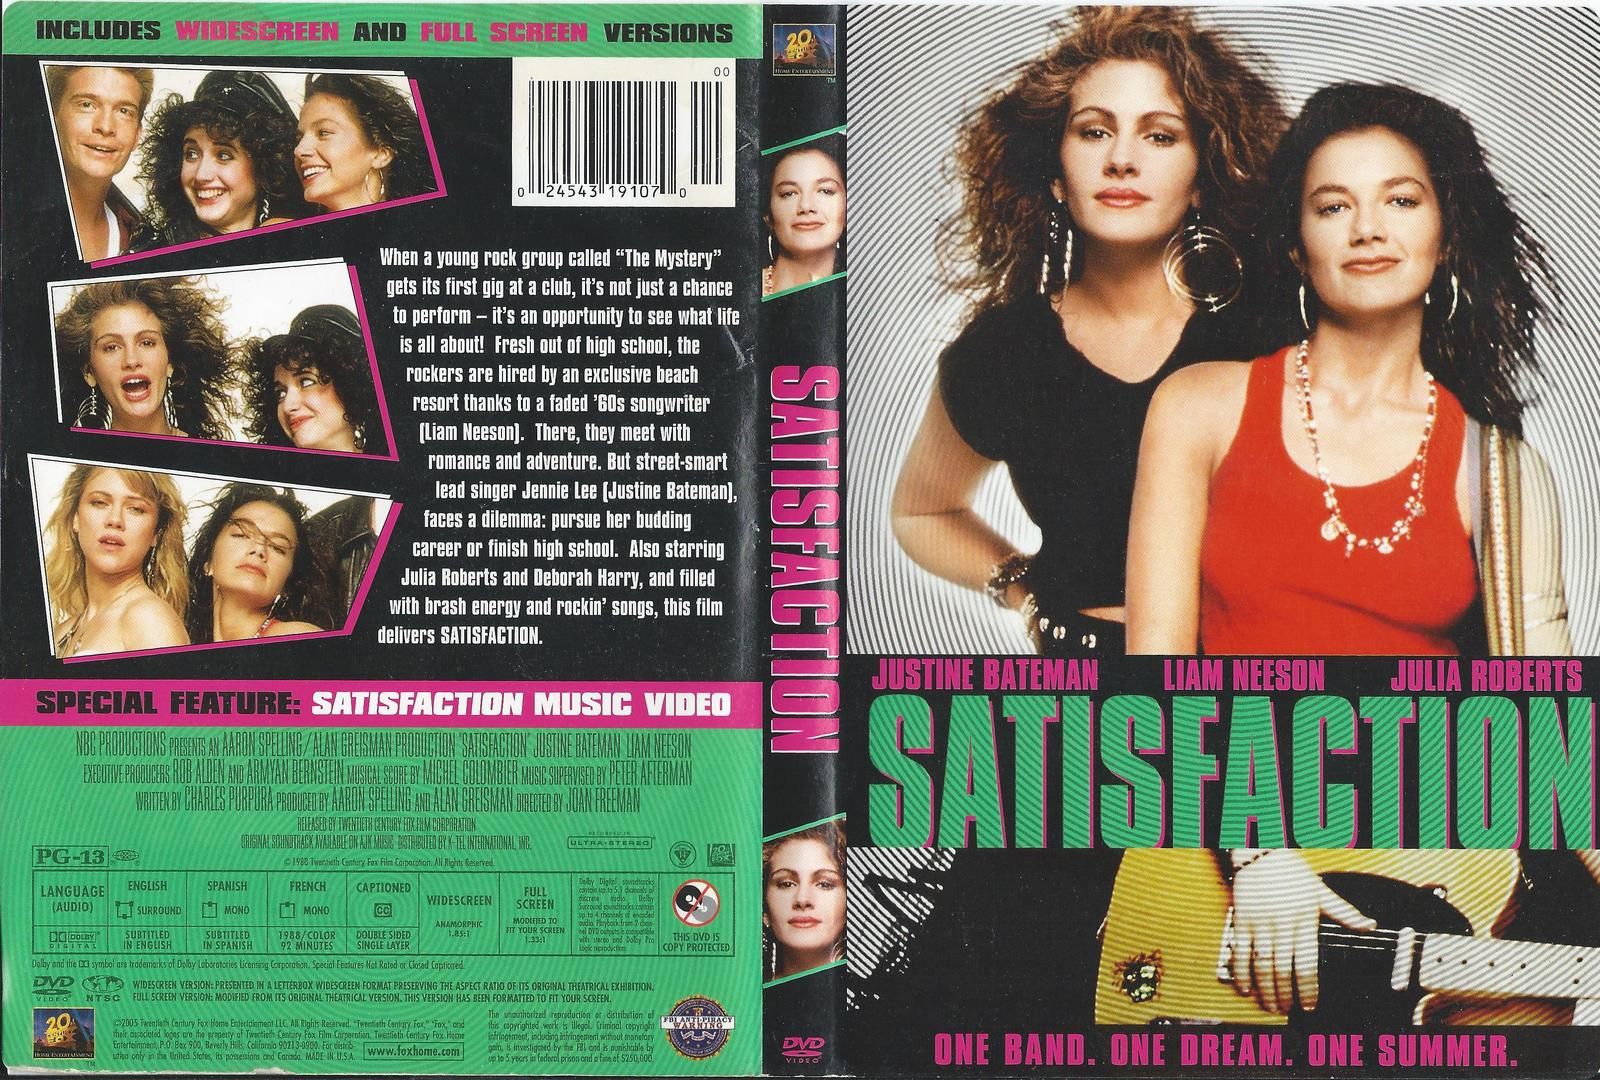 Satisfaction (1988) Julia Roberts